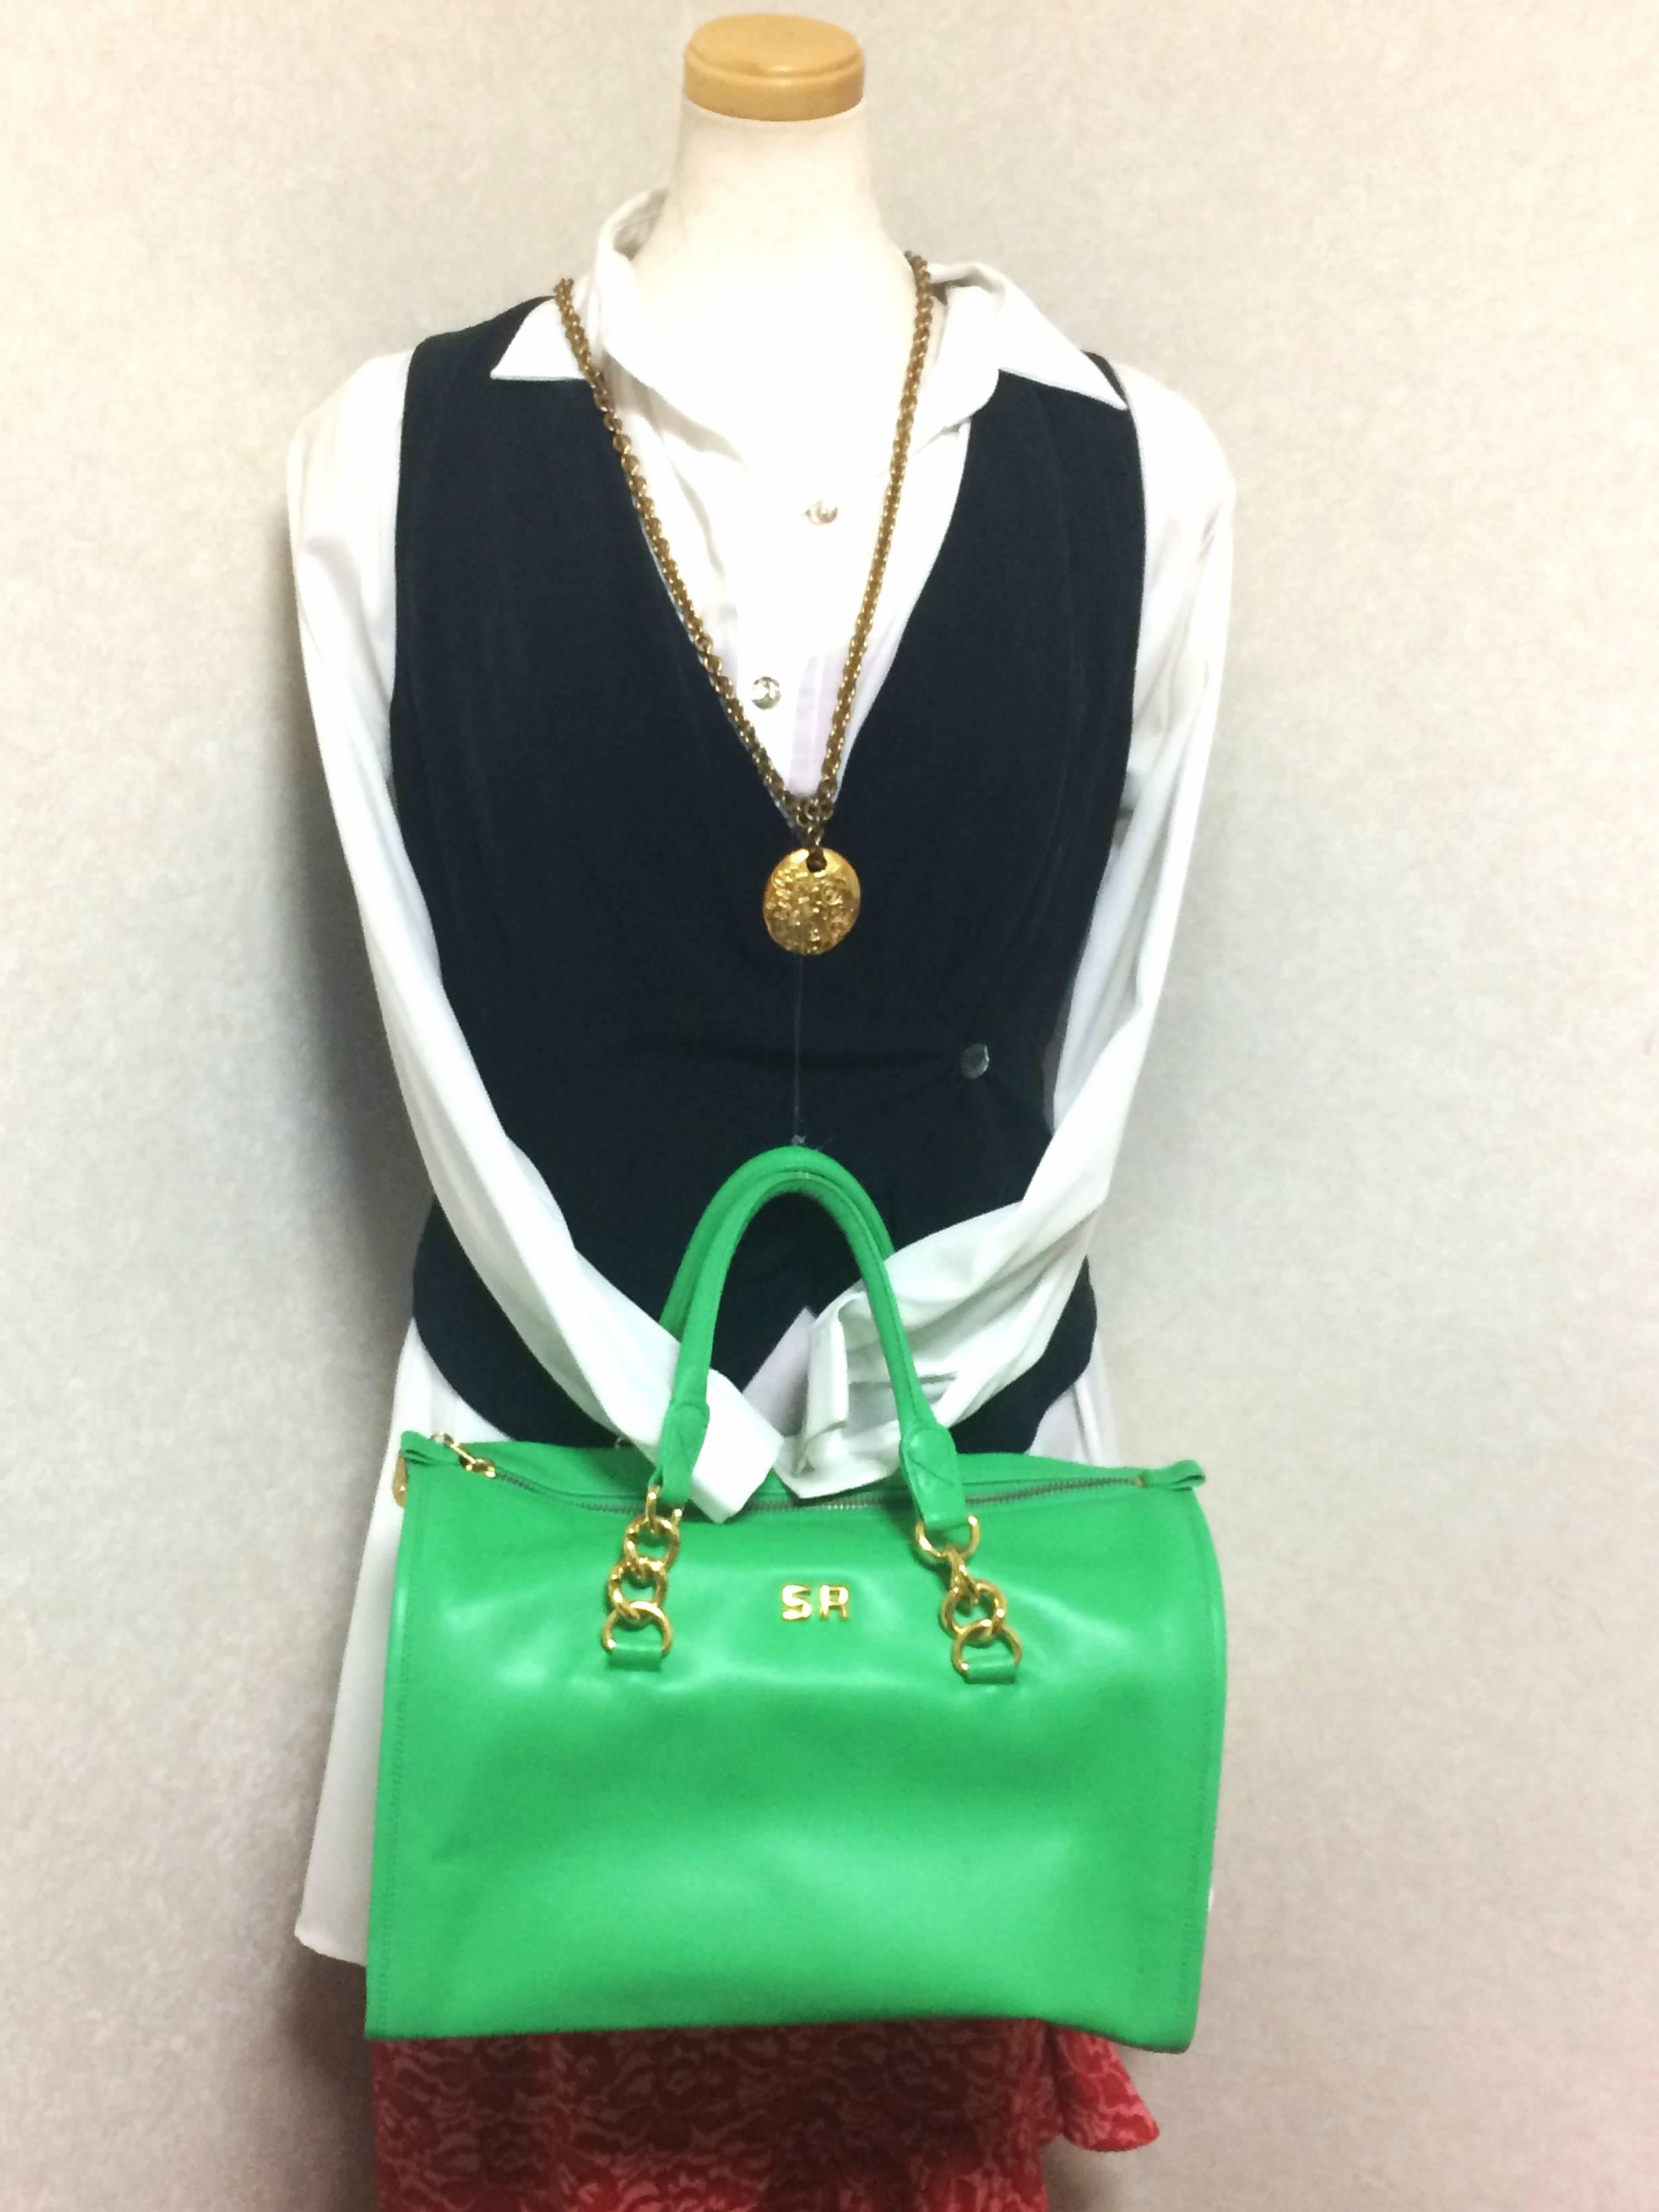 Vintage SONIA RYKIEL green leather handbag purse in speedy bag style with chains 4